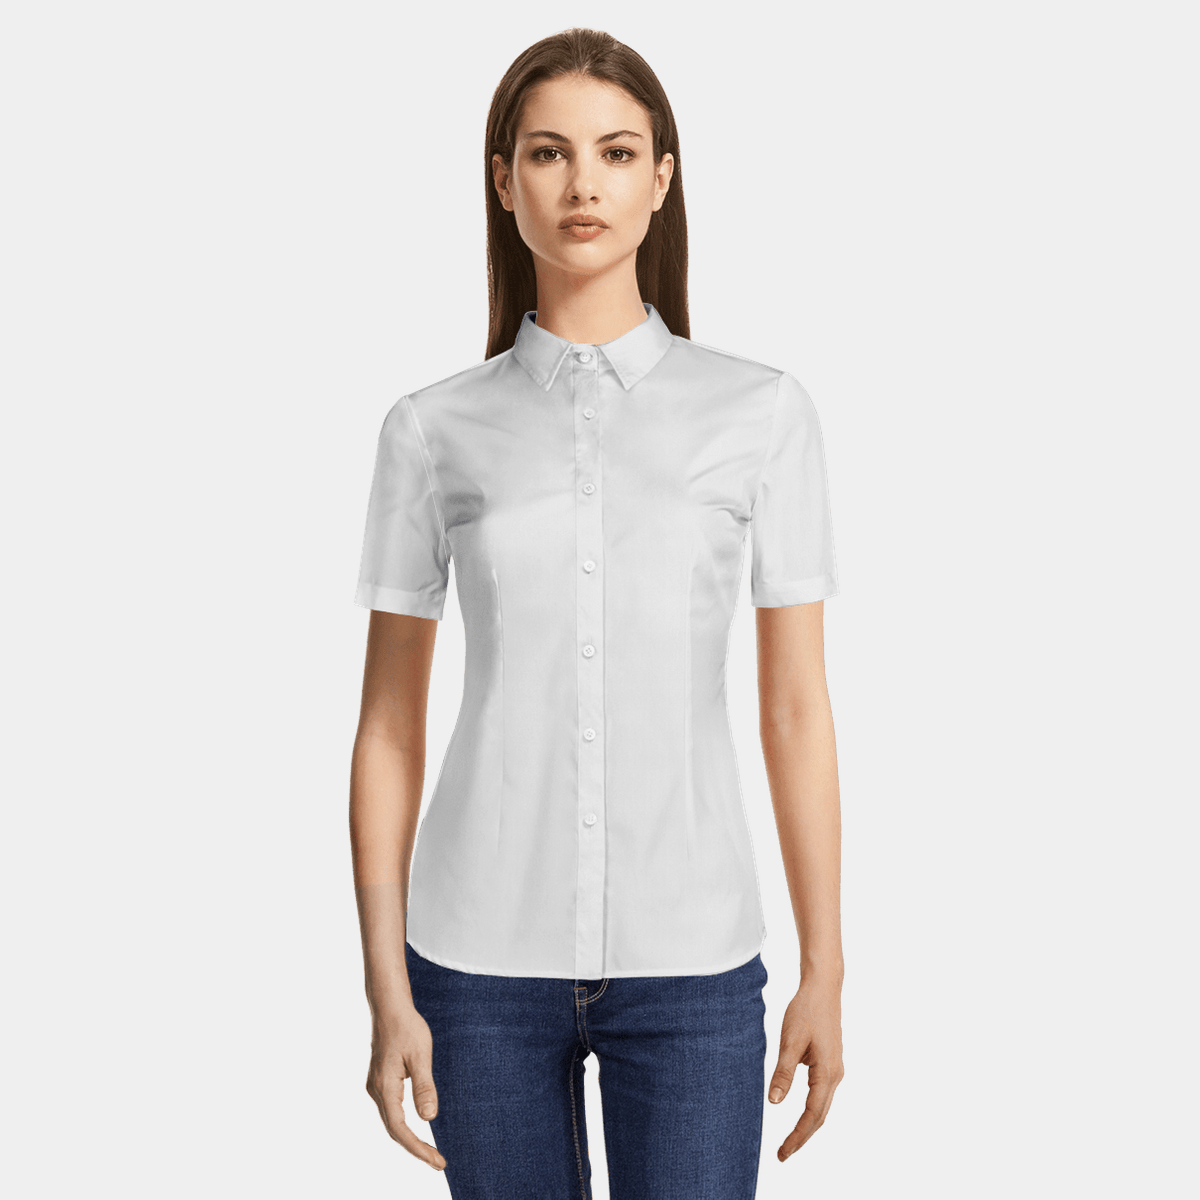 White poplin cotton Dress Shirt